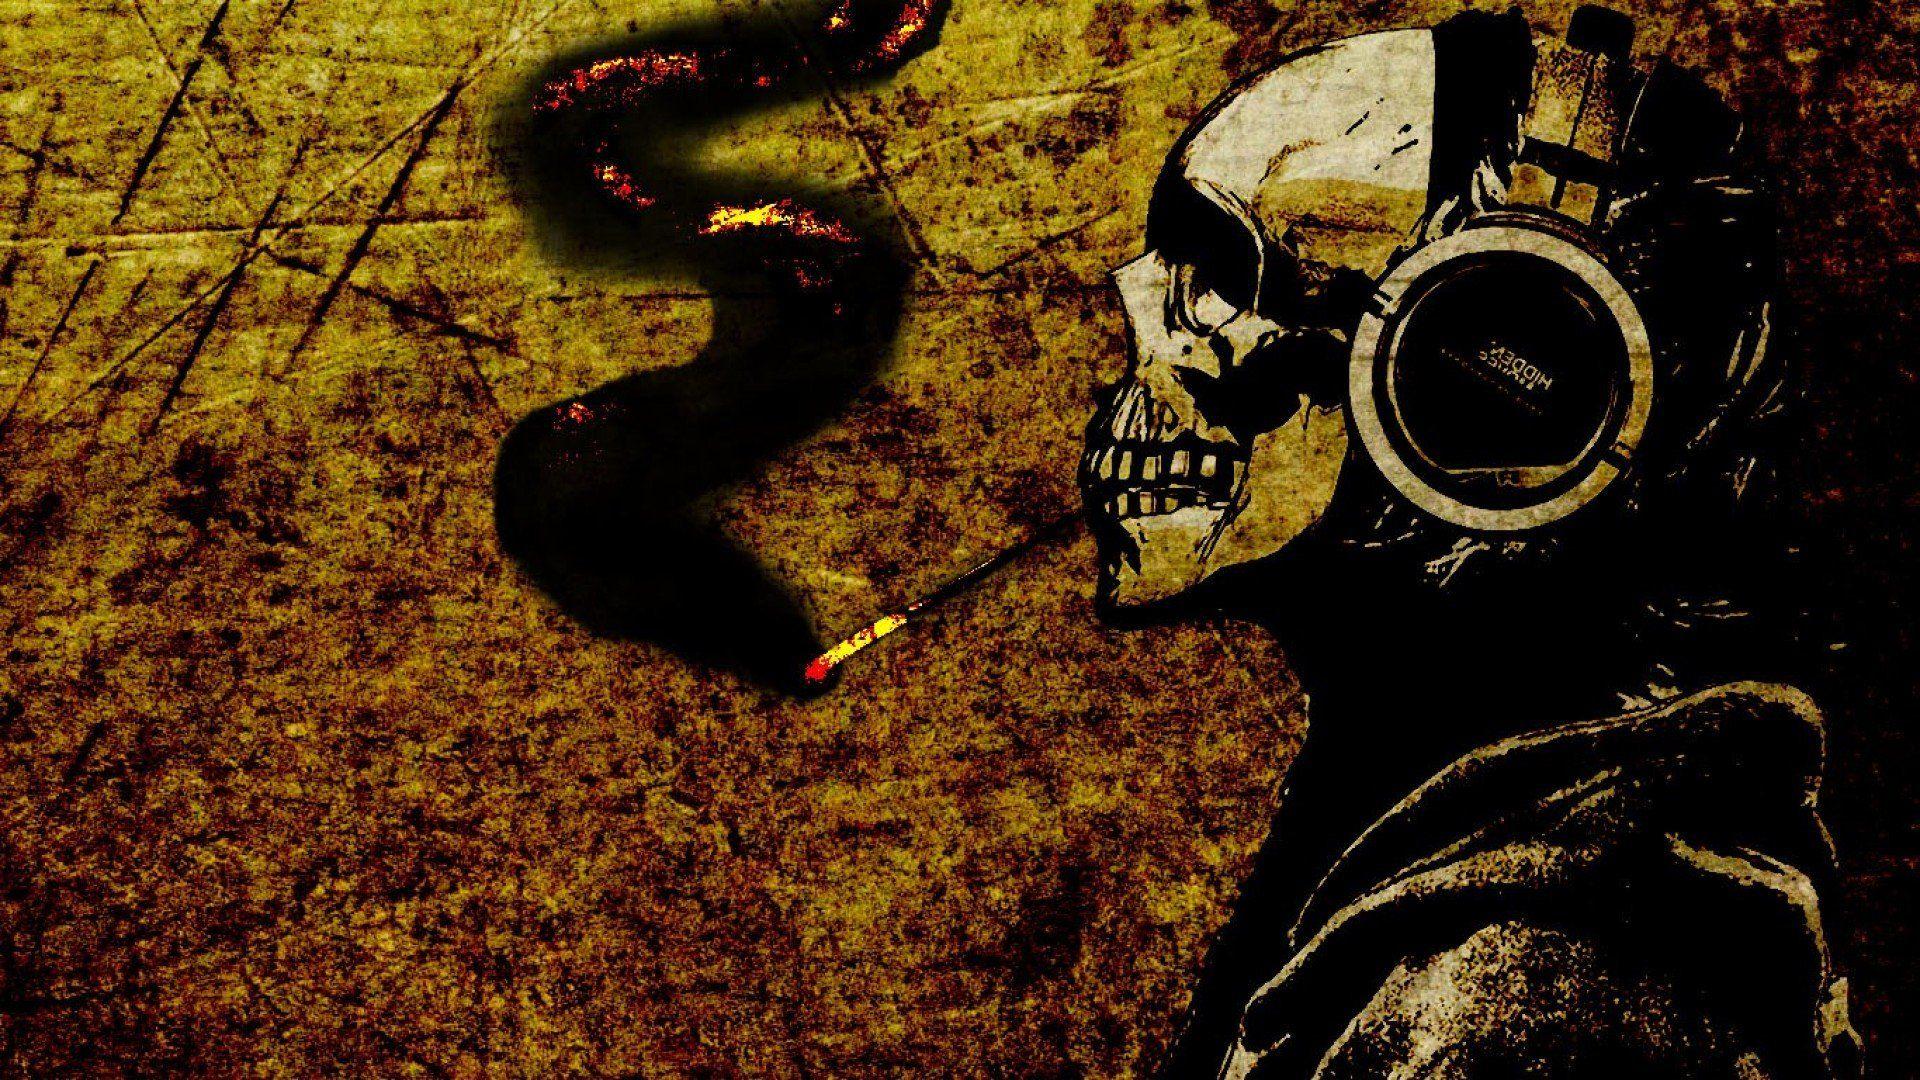 34+] Smoking Skull Live Wallpaper - WallpaperSafari